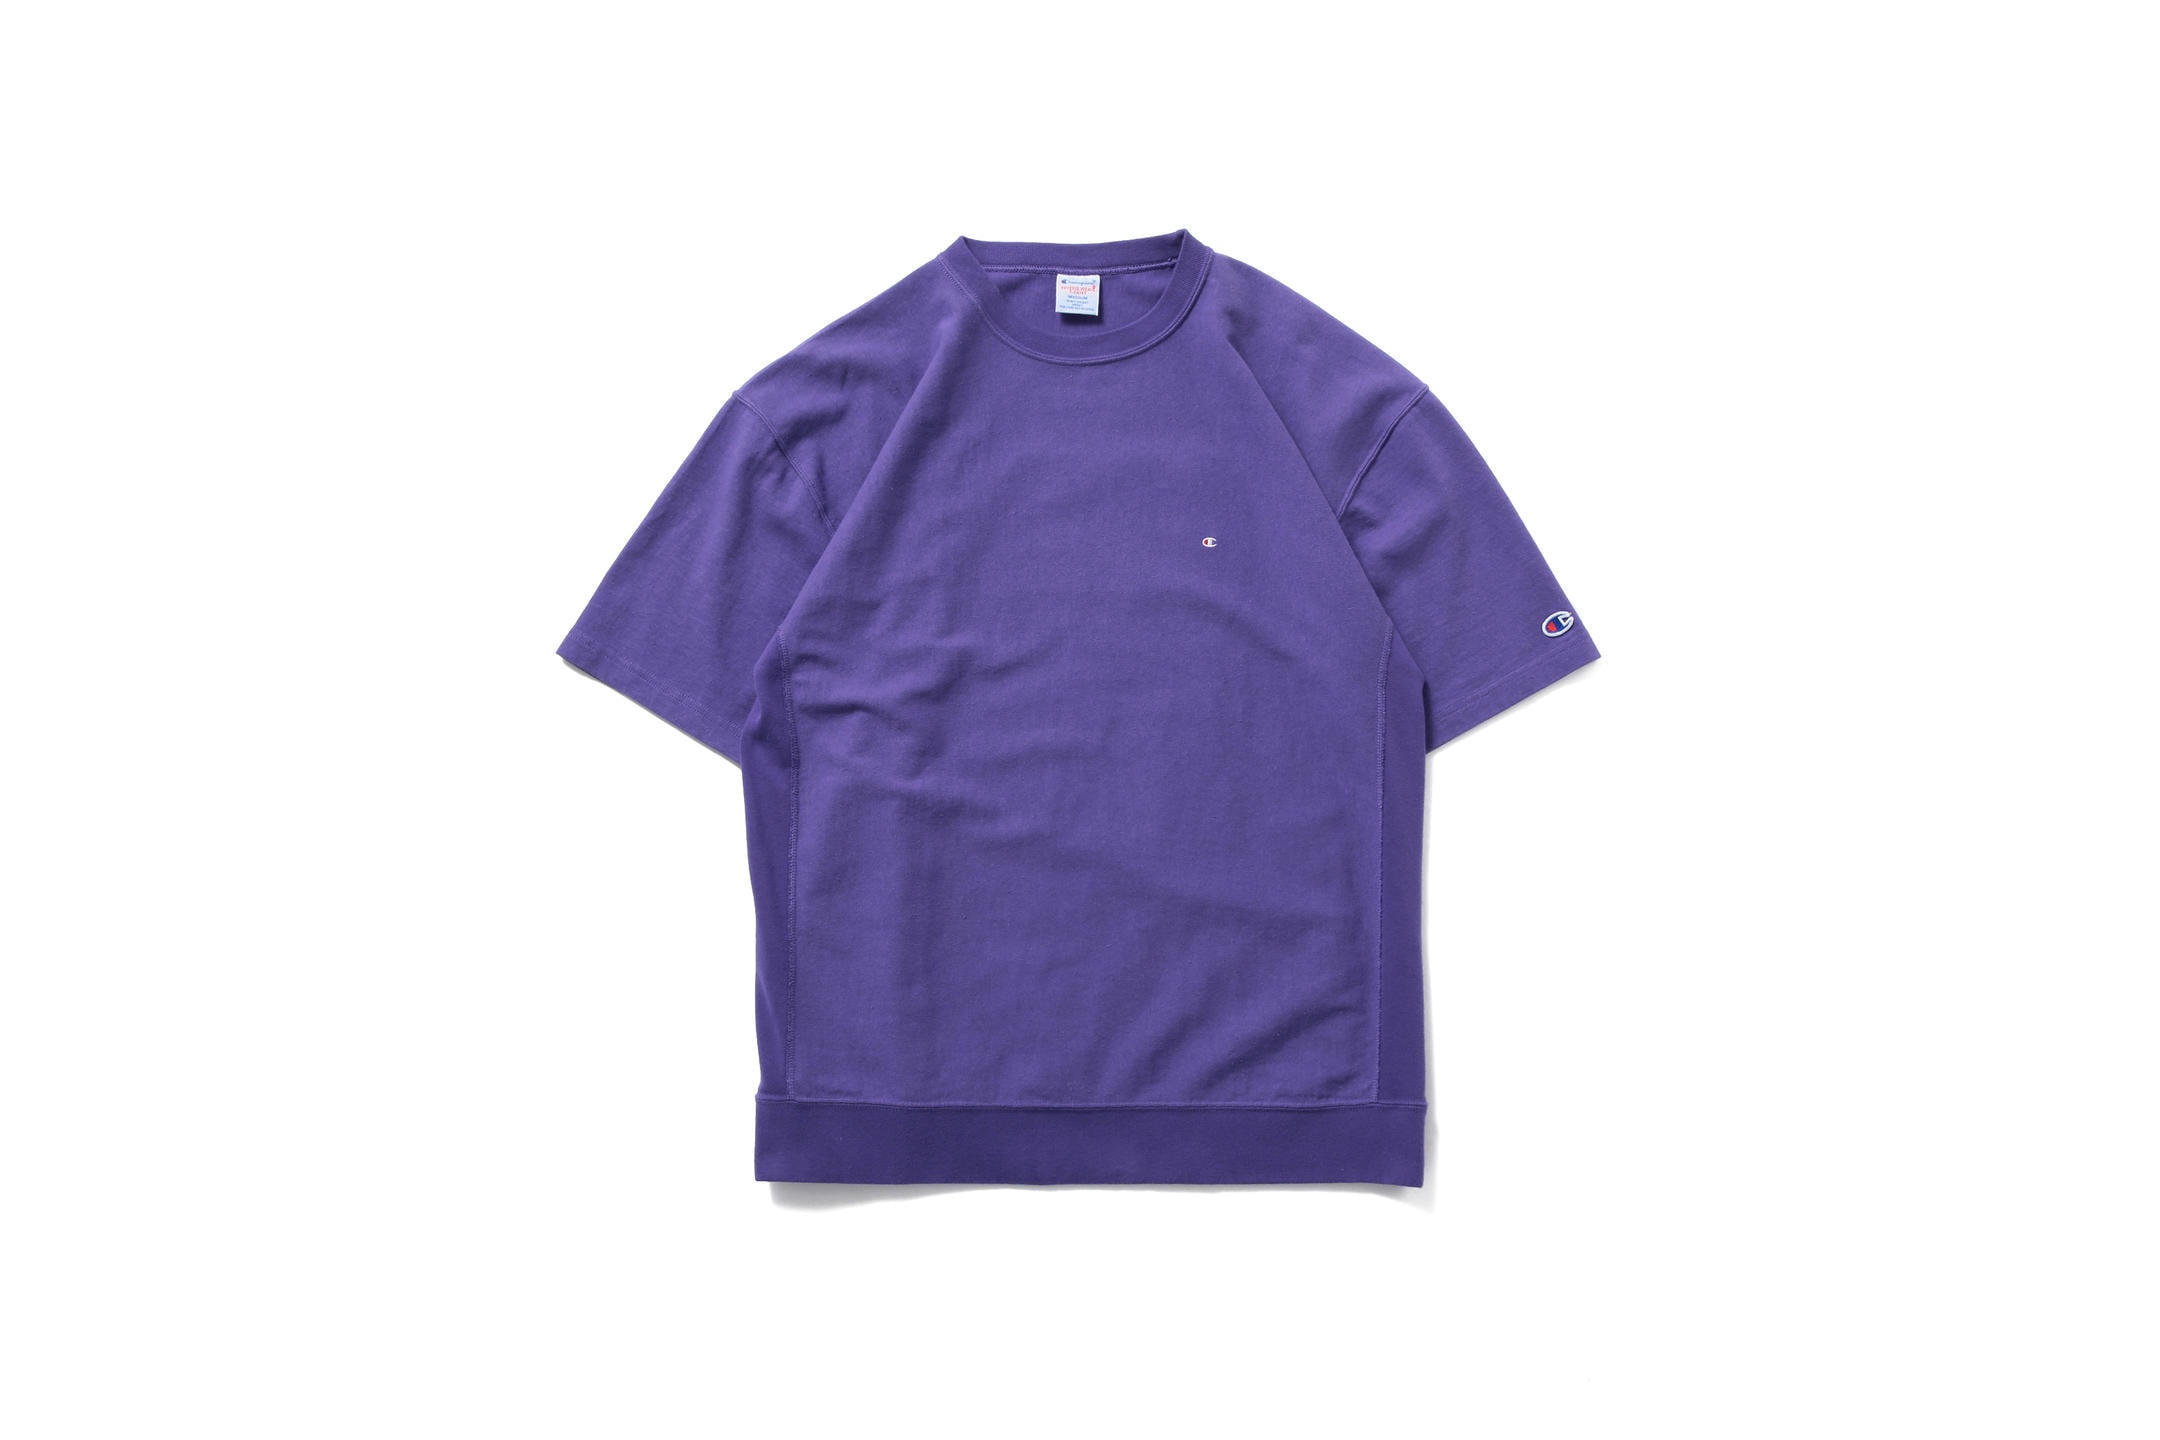 BEAMS x Champion Reverse Weave 联名 T-Shirt 系列